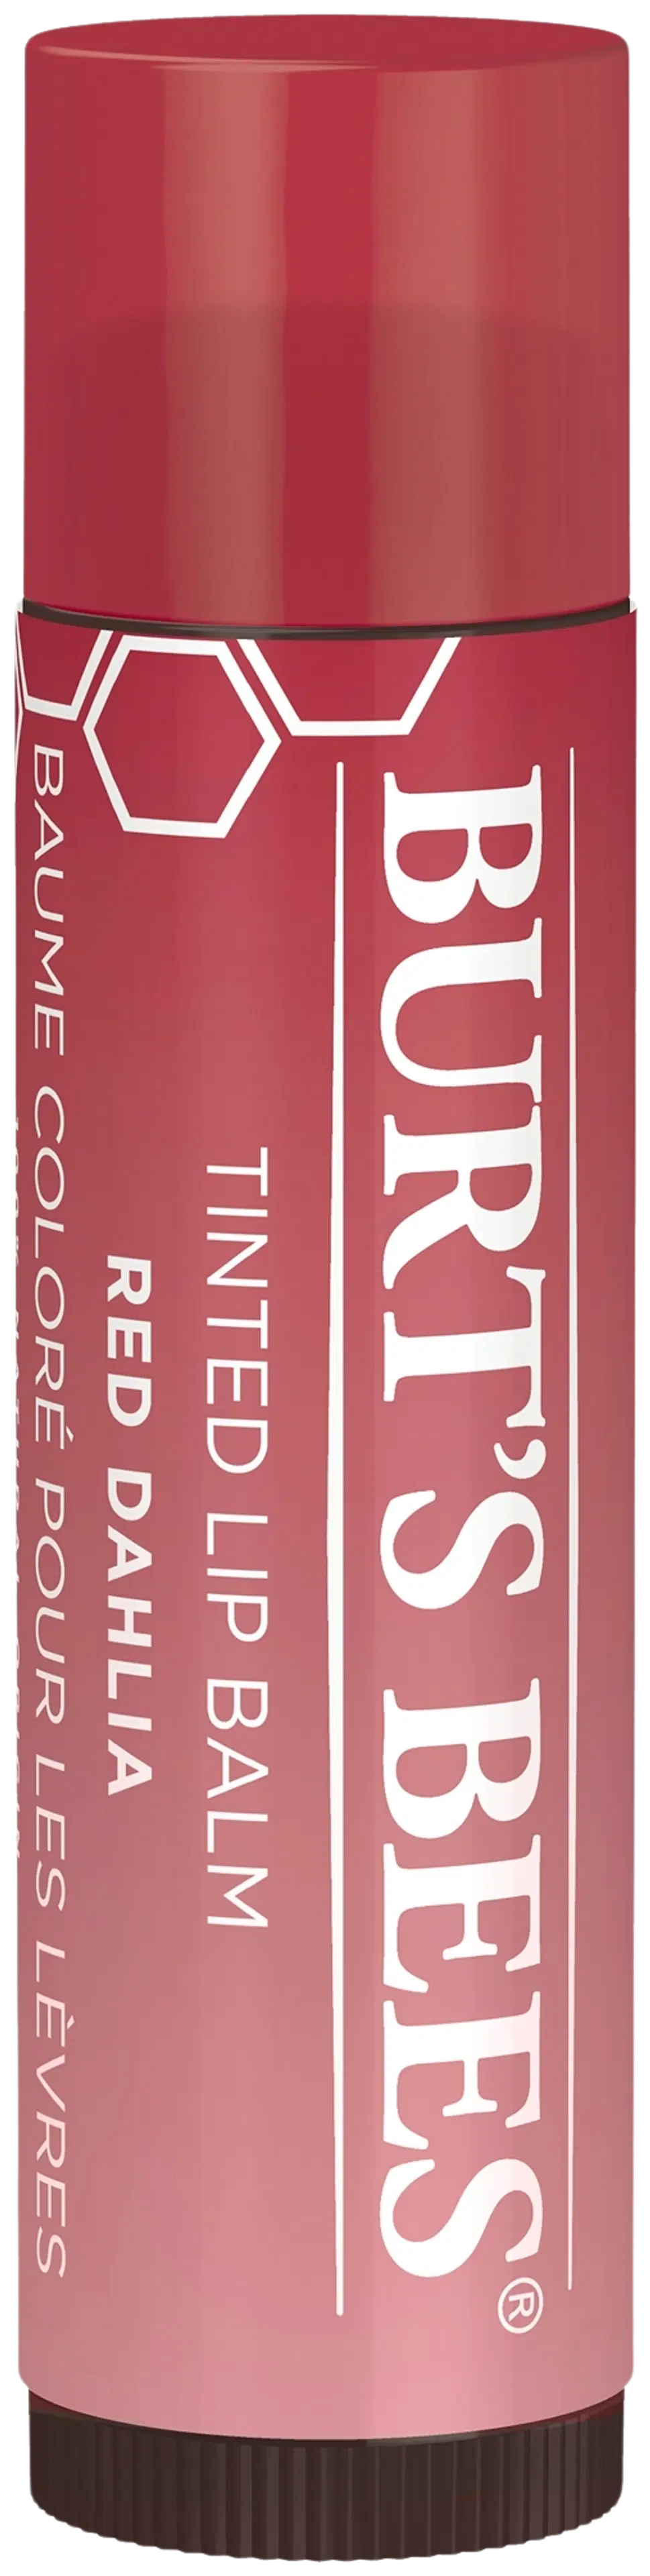 Burt's Bees Tinted Lip Balm Red Dahlia värillinen huulirasva 4,25 g